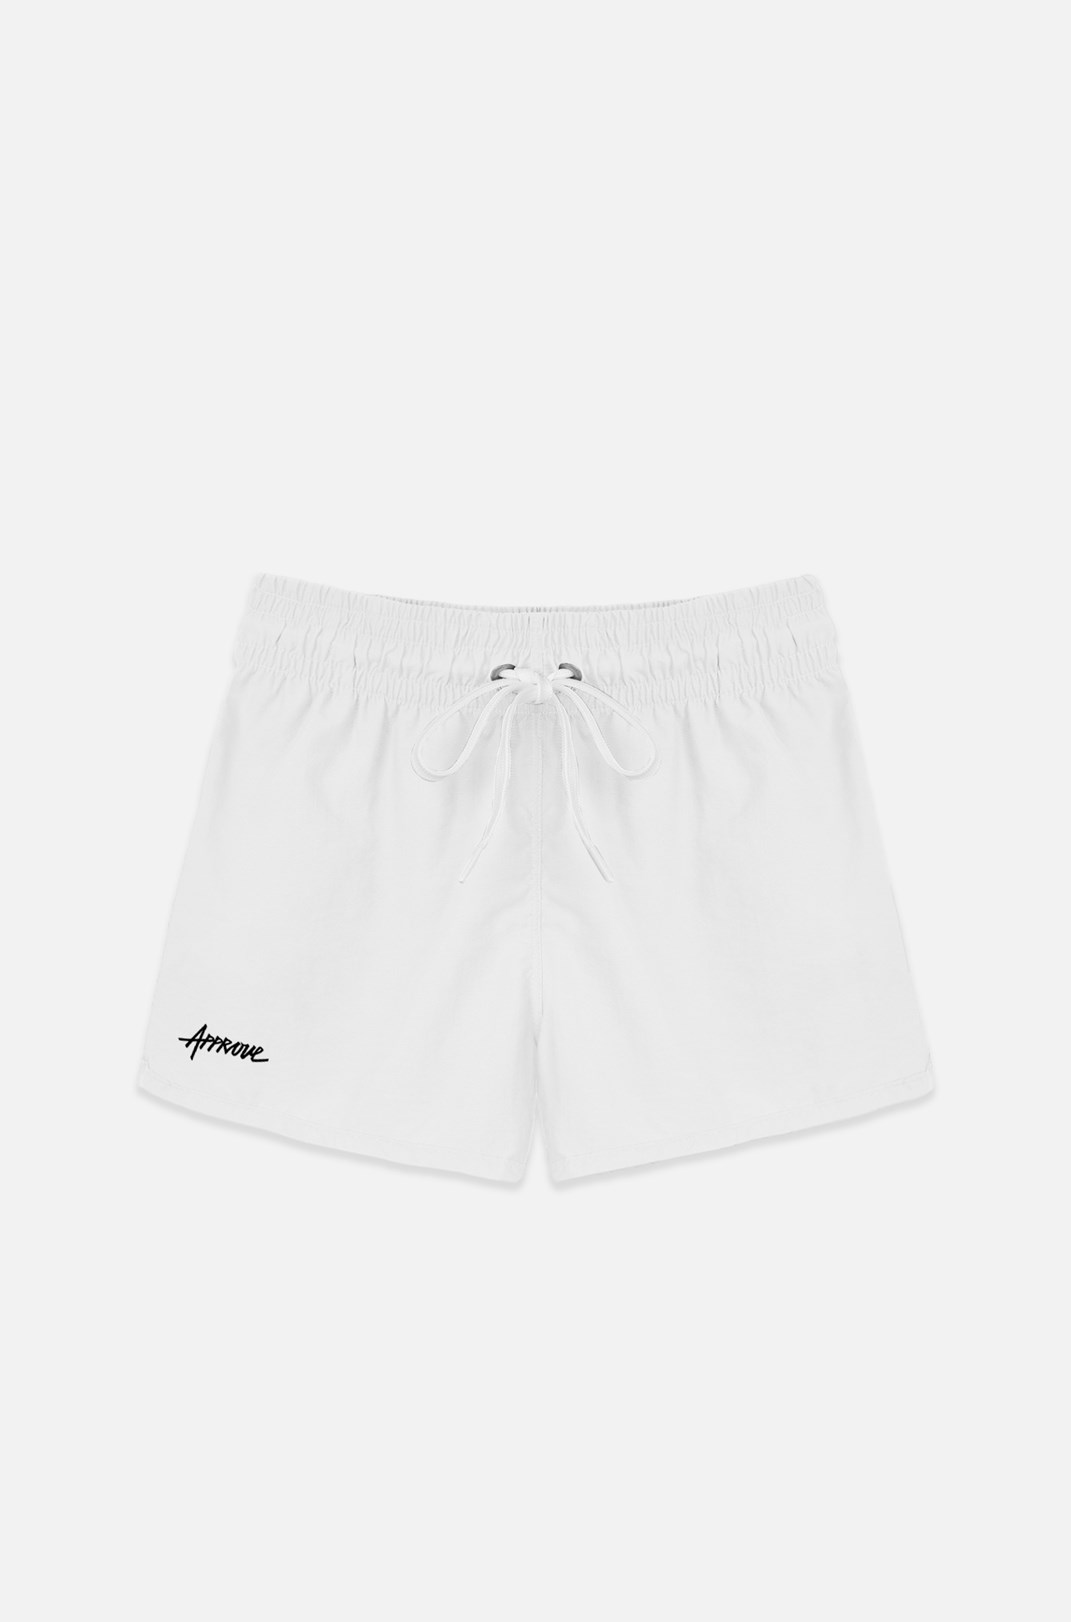 Shorts Approve Branco II